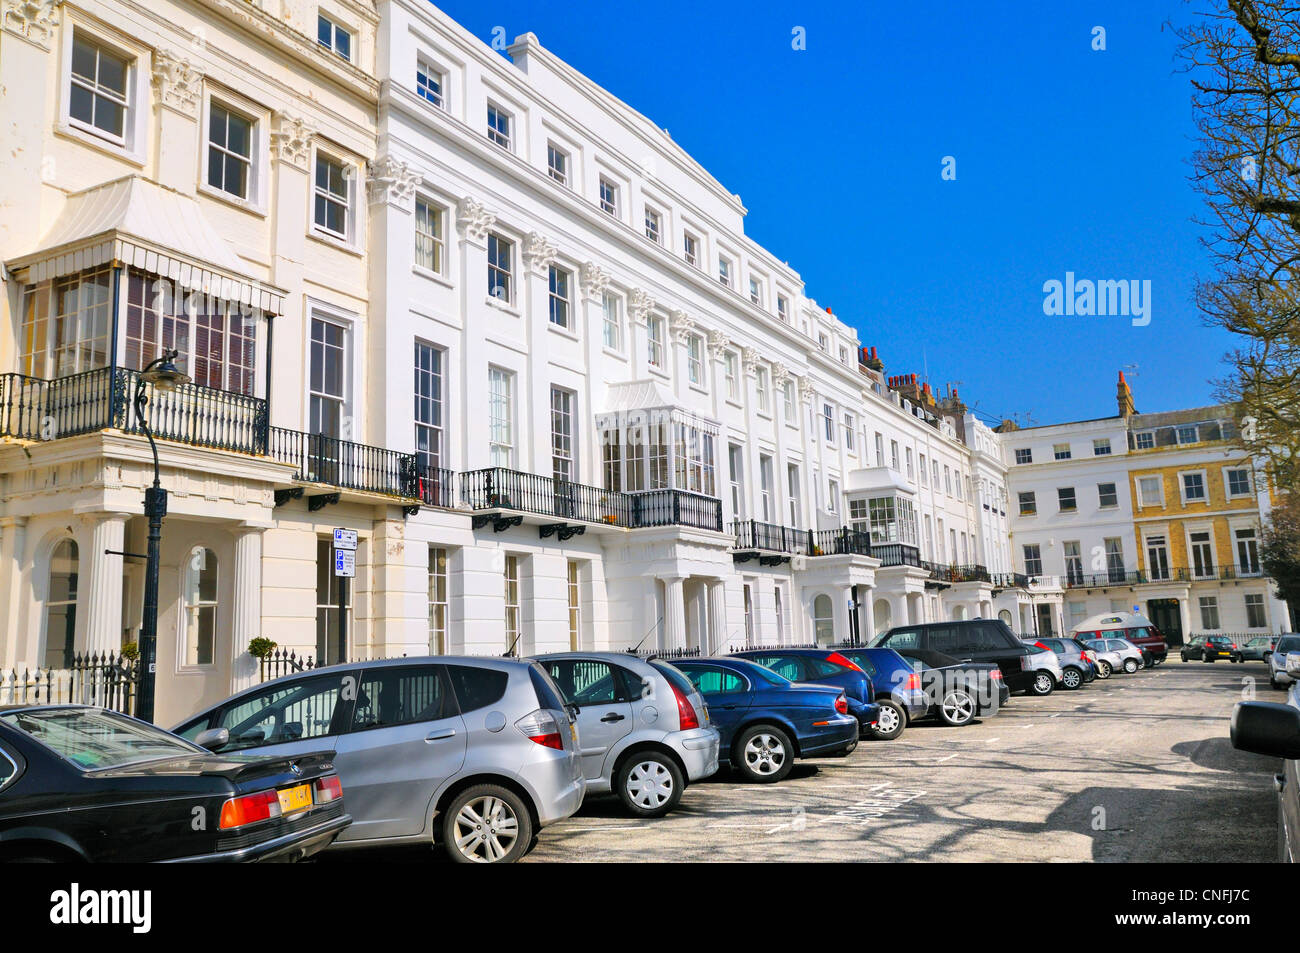 Sussex Square, Kemp Town, Brighton, East Sussex, UK Stockfoto